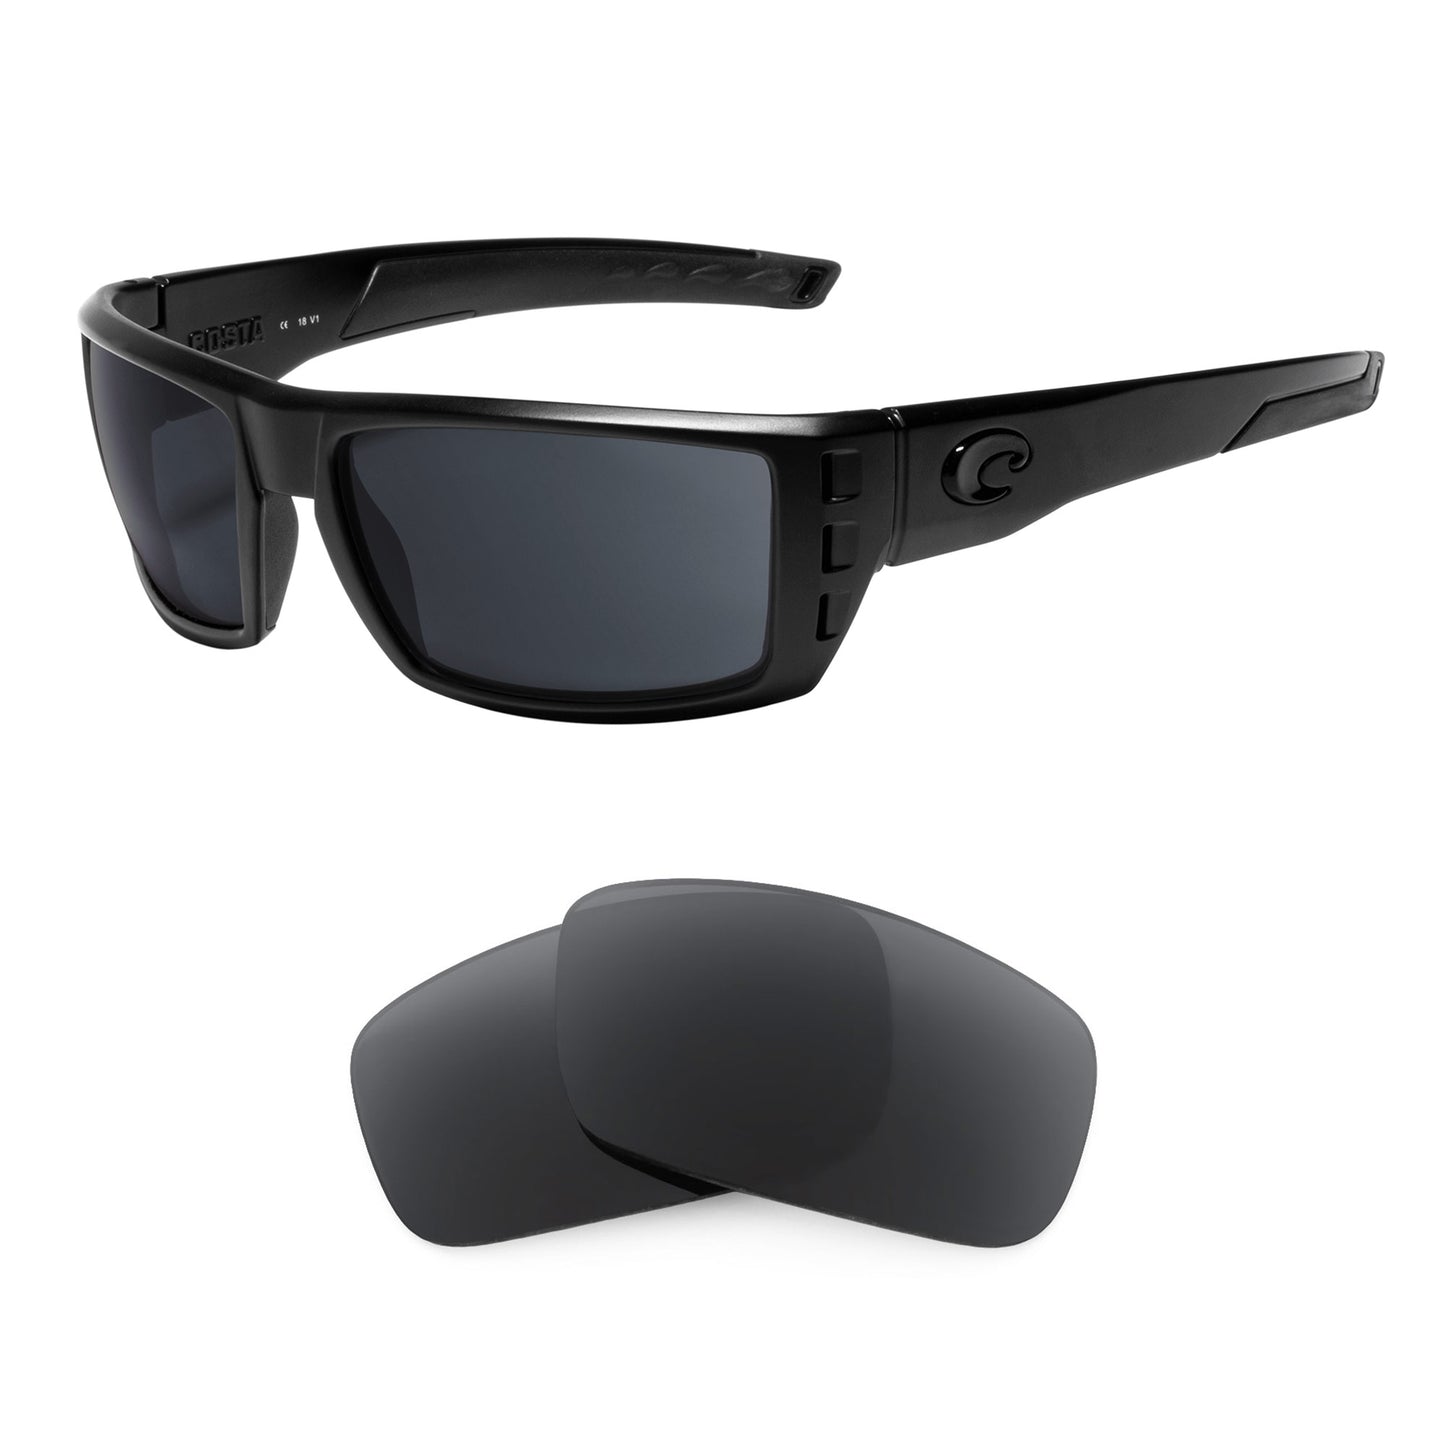 Costa Rafael sunglasses with replacement lenses